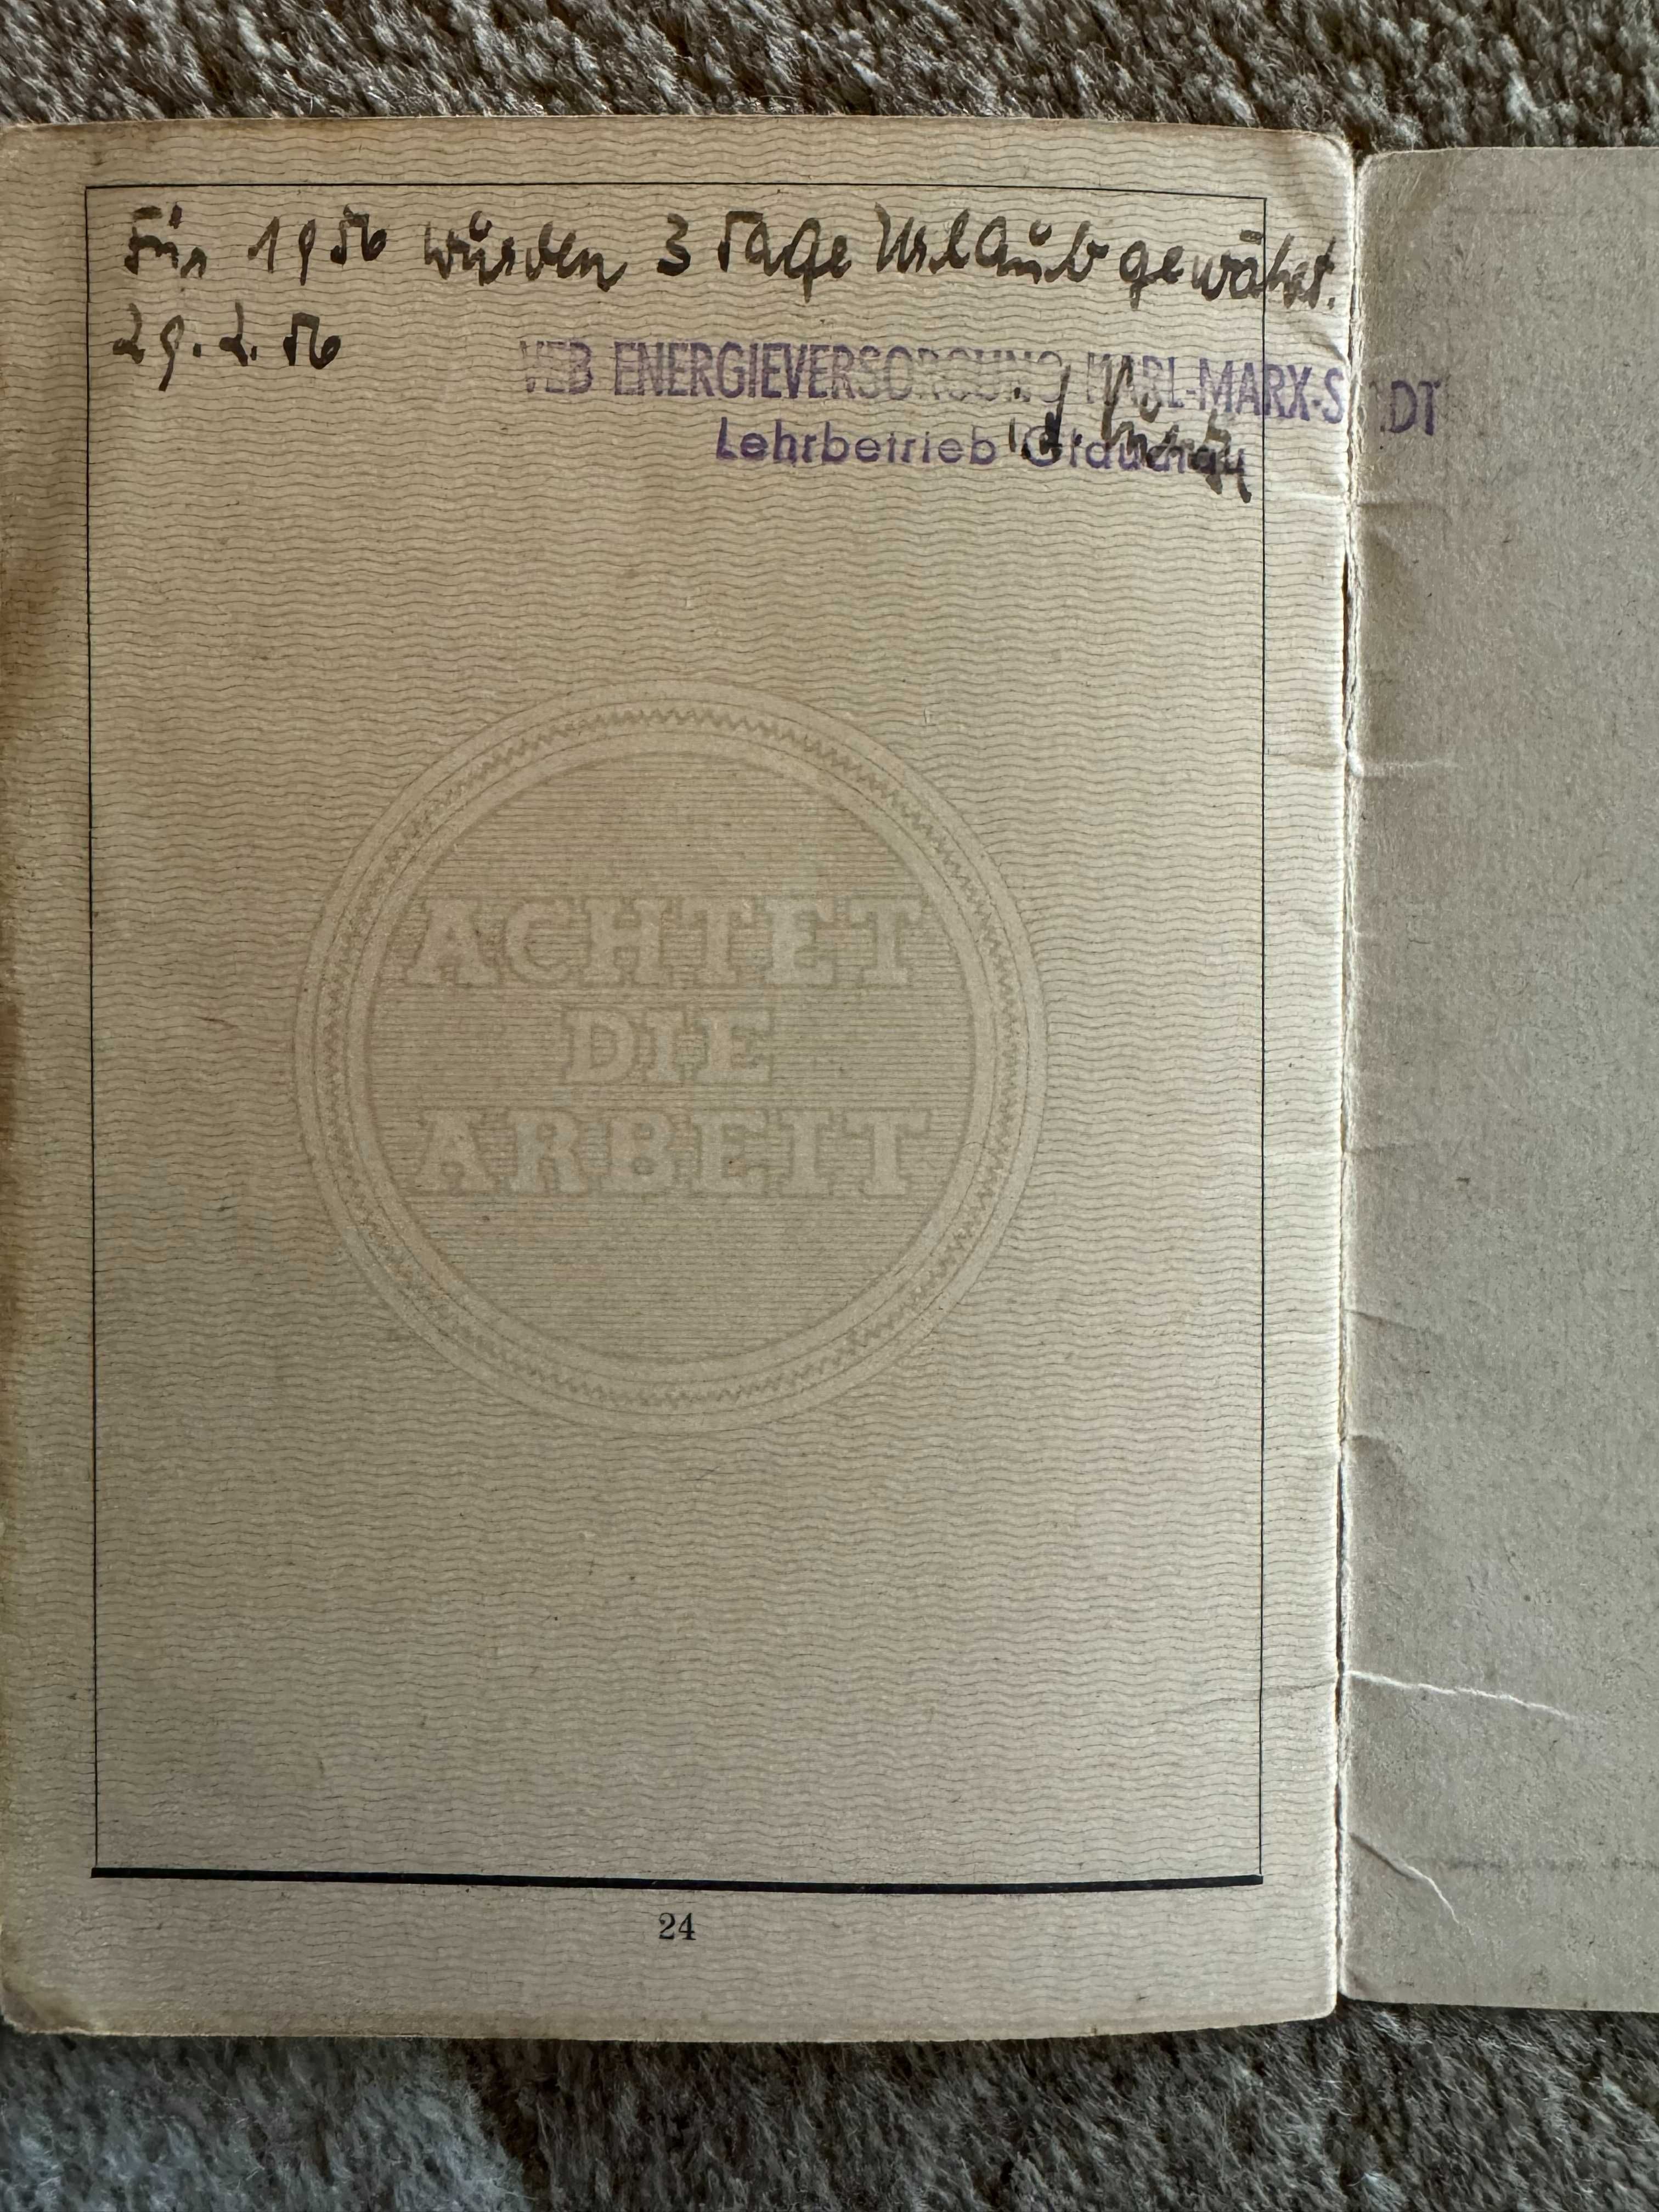 Arbeits Buch, documento historico-militar